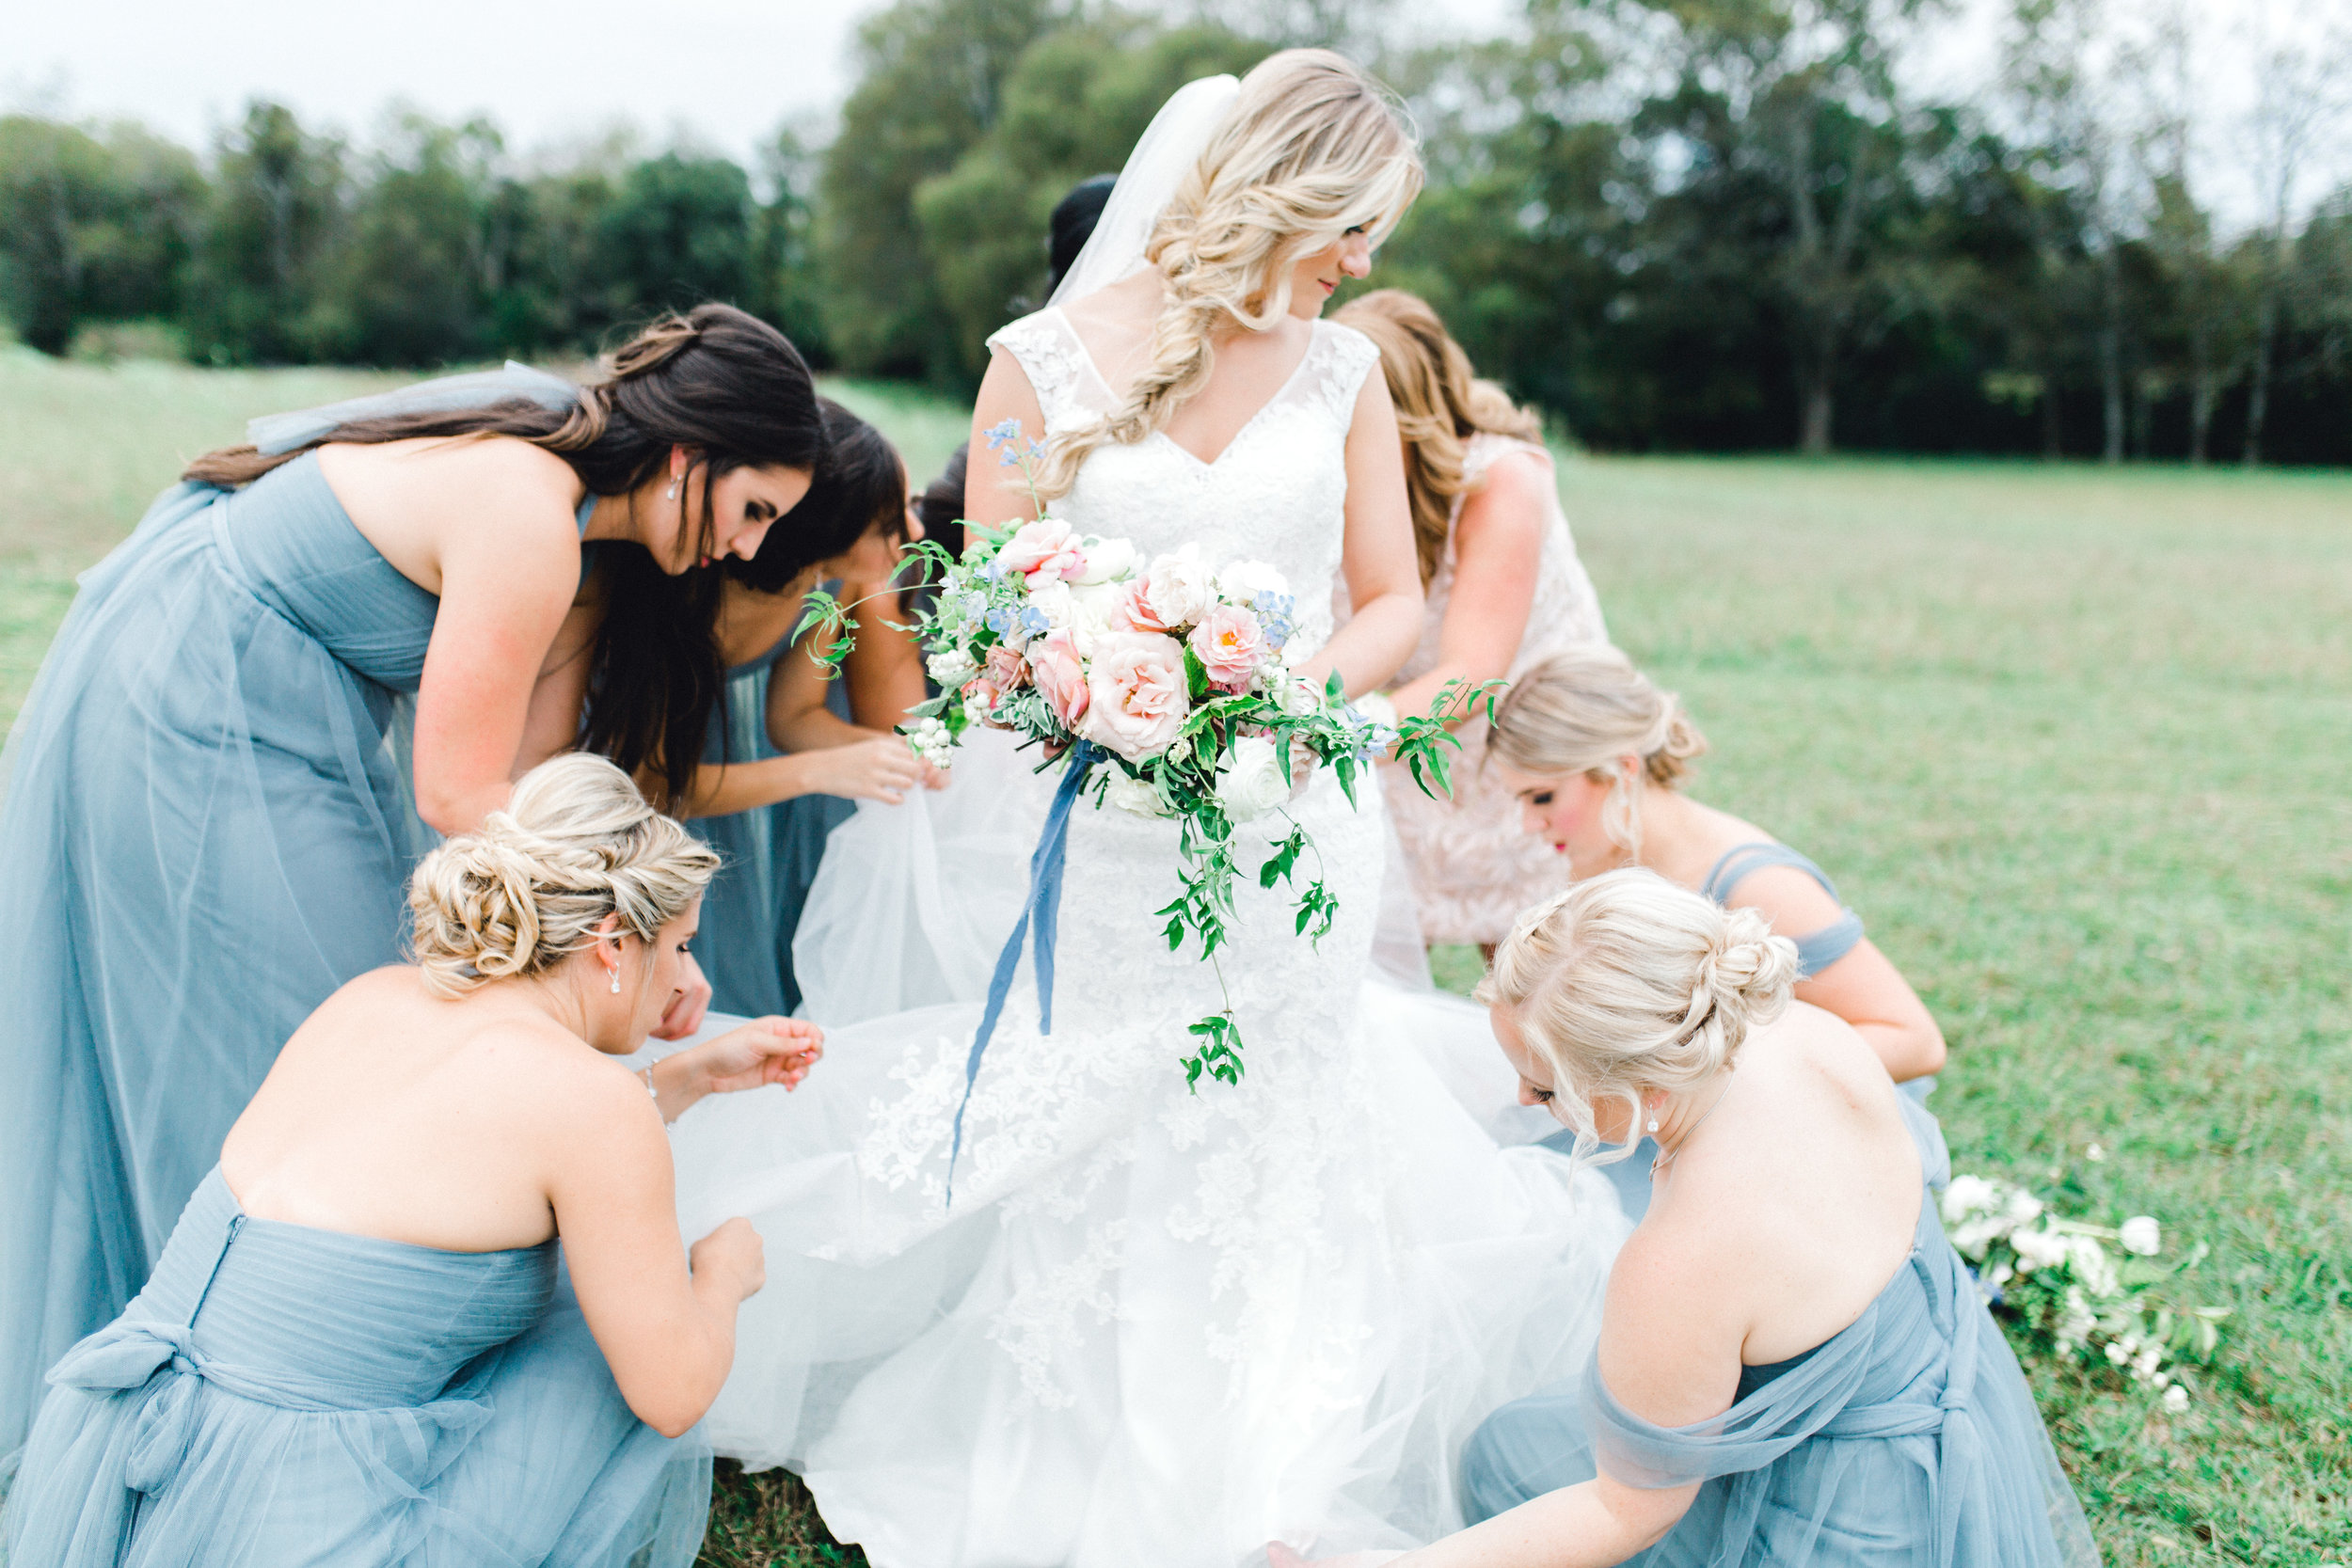 Paige-Mercer-Photography-Florida-Wedding-Photographer-Alyssa&Drew-129.jpg